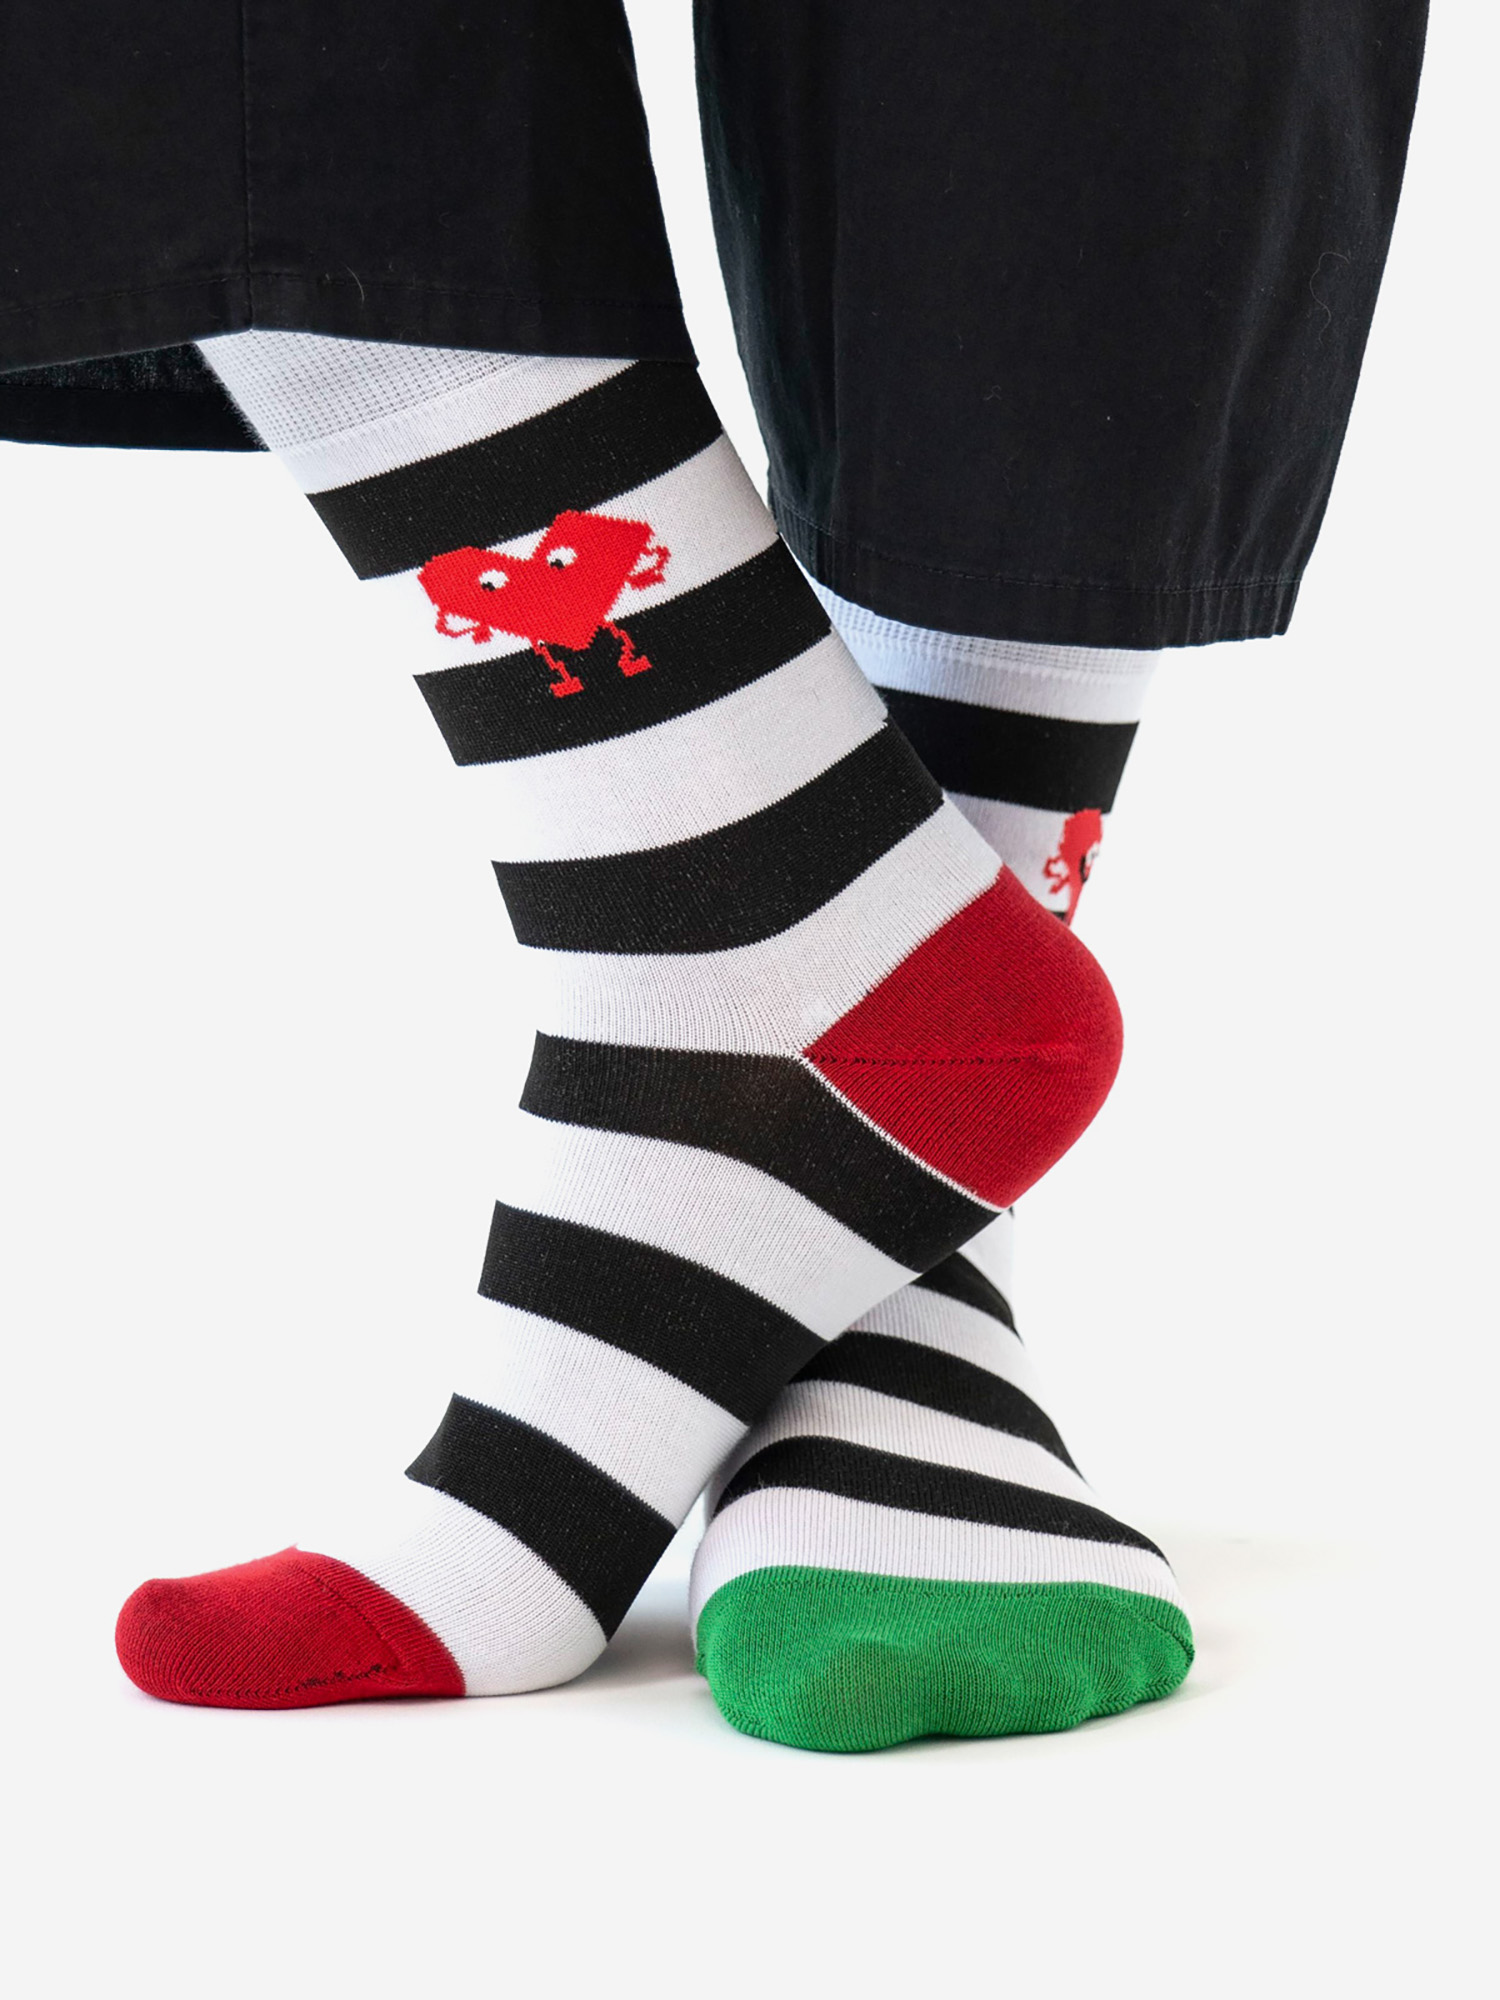 Носки St. Friday Socks - Полоски с сердечком, Черный носки st friday socks полоски с сердечком голубой